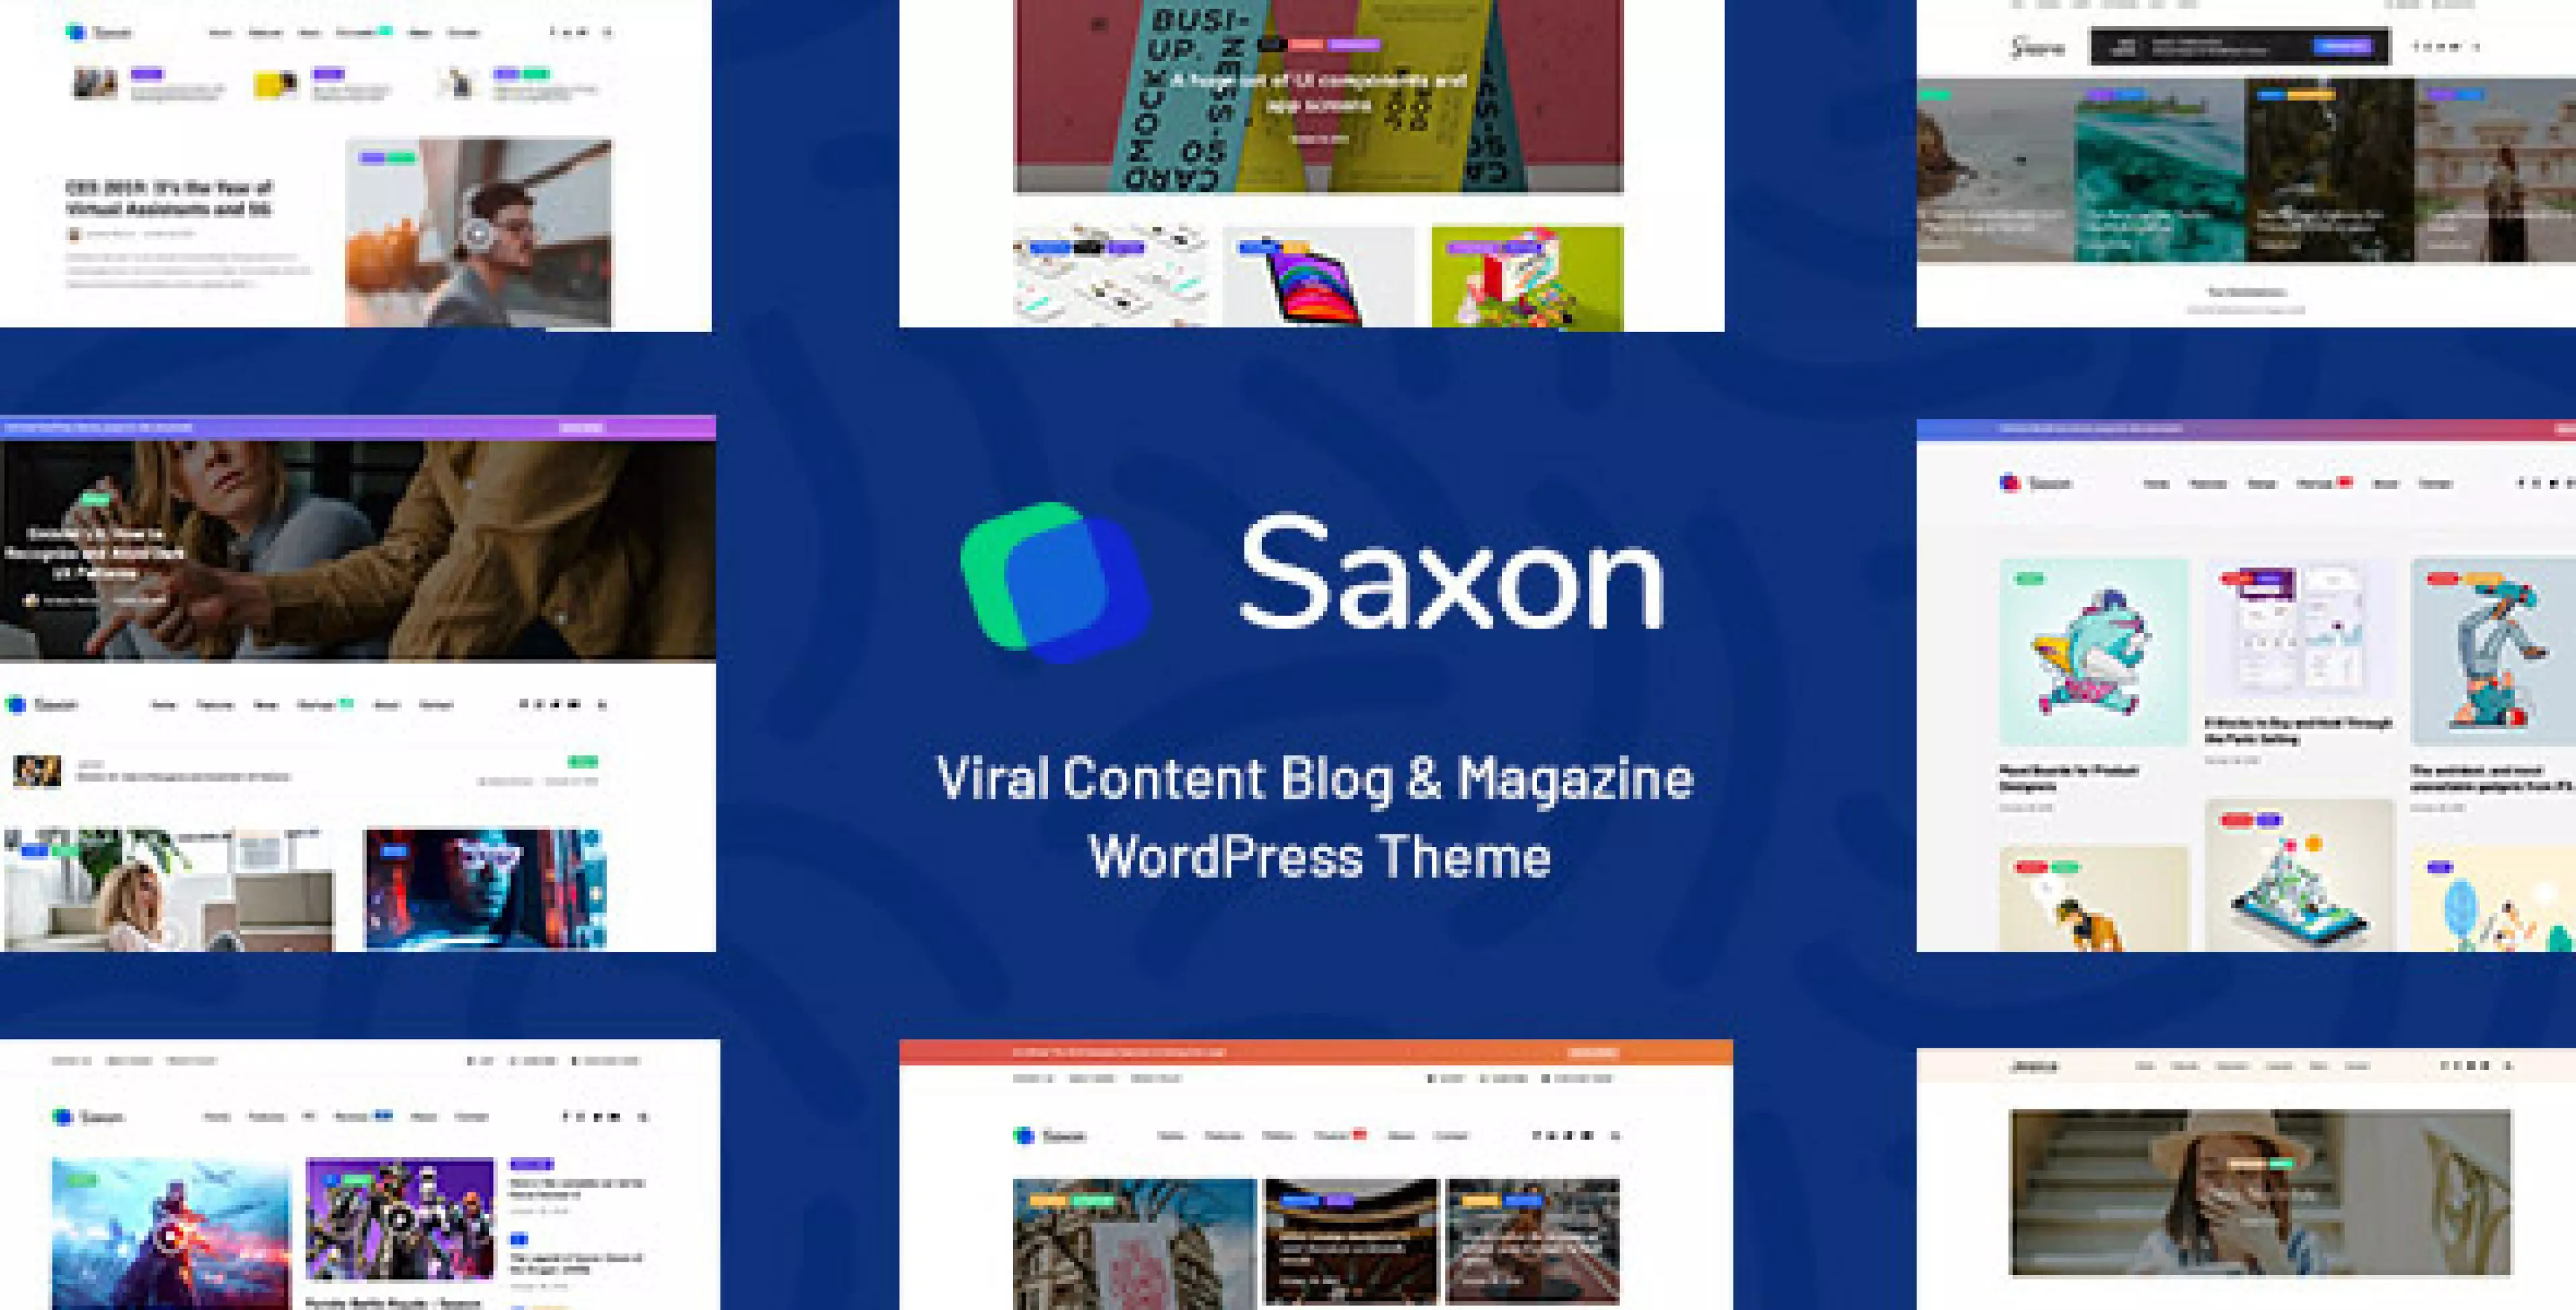 Saxon - Viral Content Blog & Magazine Marketing WordPress Theme 1.8.1